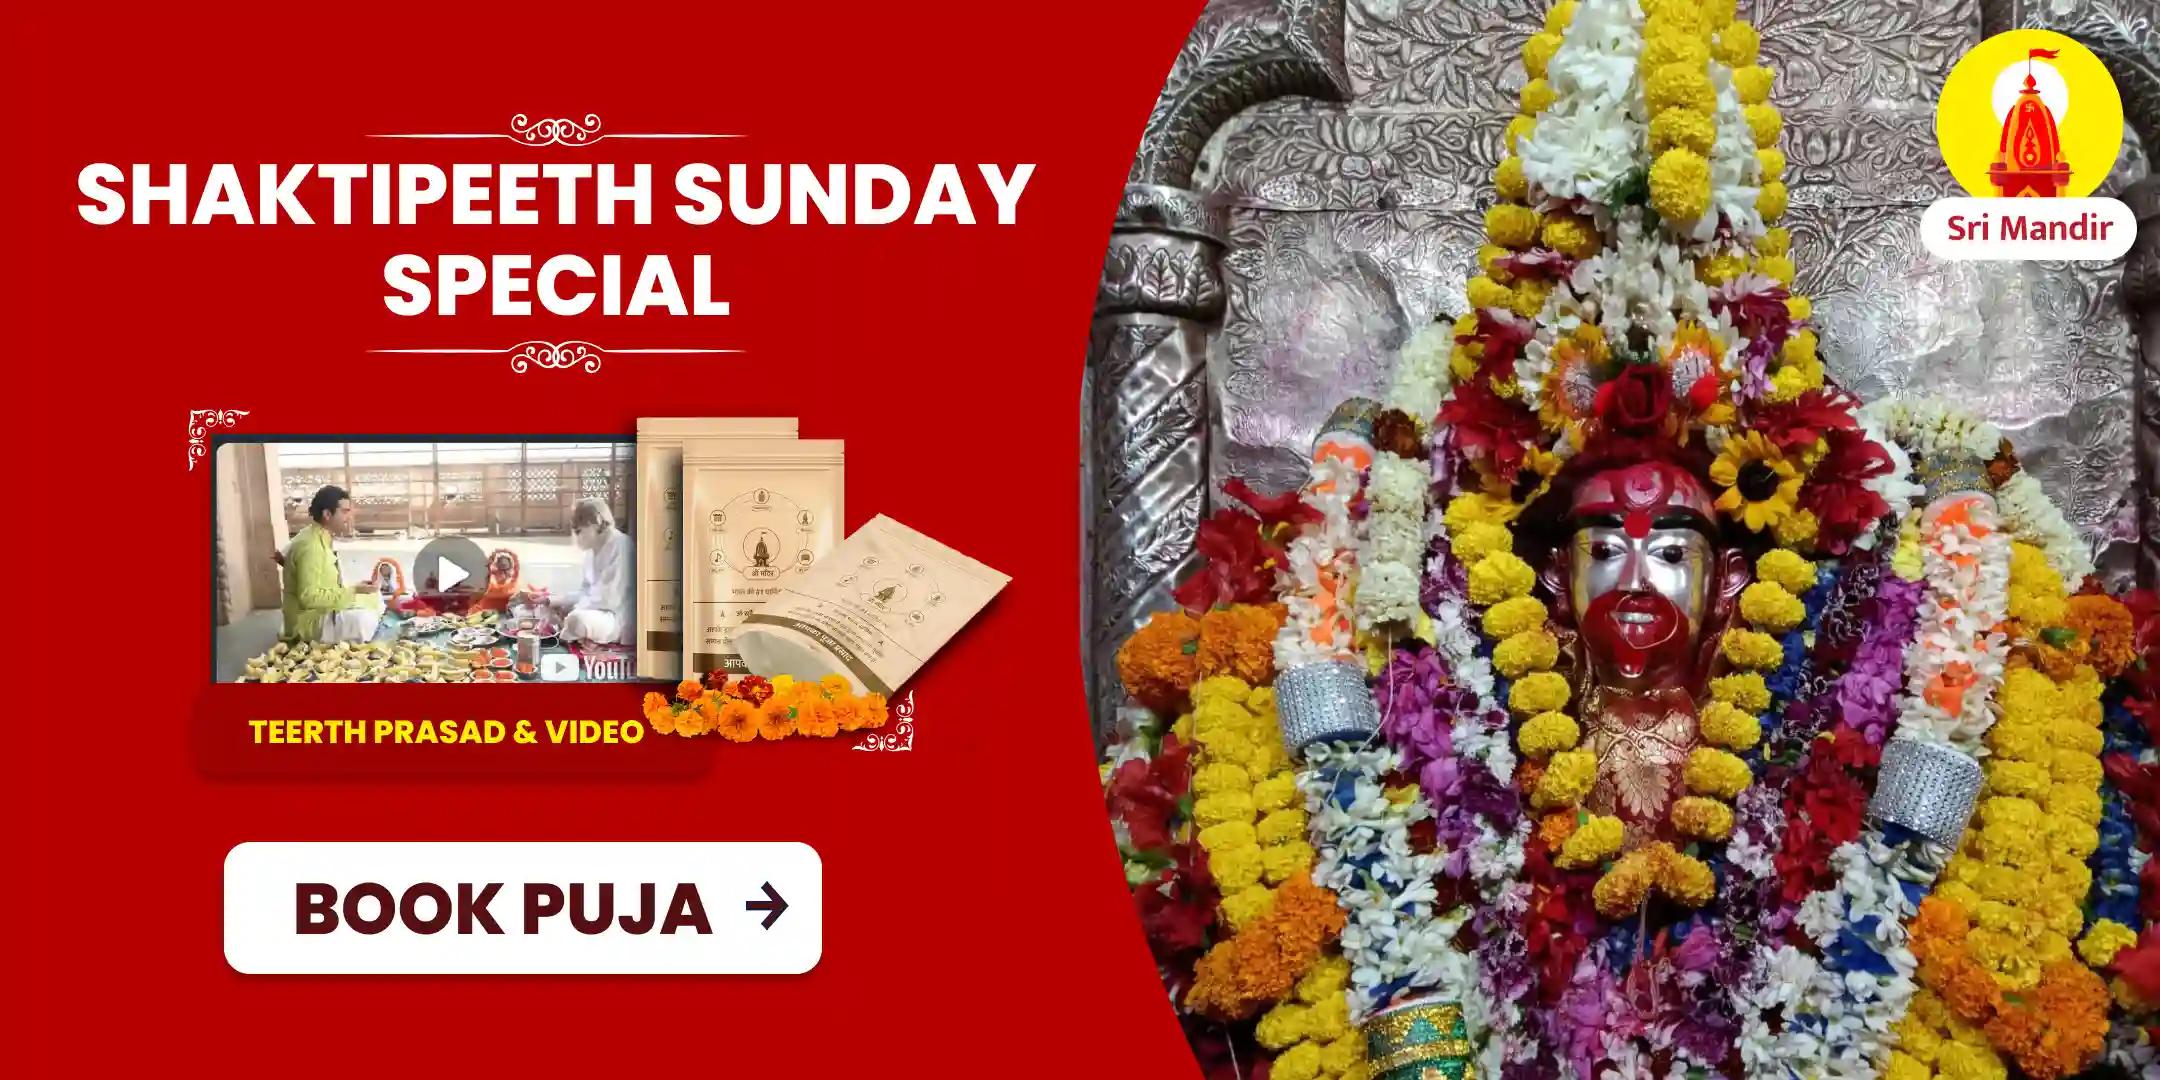 Shaktipeeth Sunday Special Maa Tara Tantrokta Mahapuja for Protection from Negative Energy and Overcoming Fear